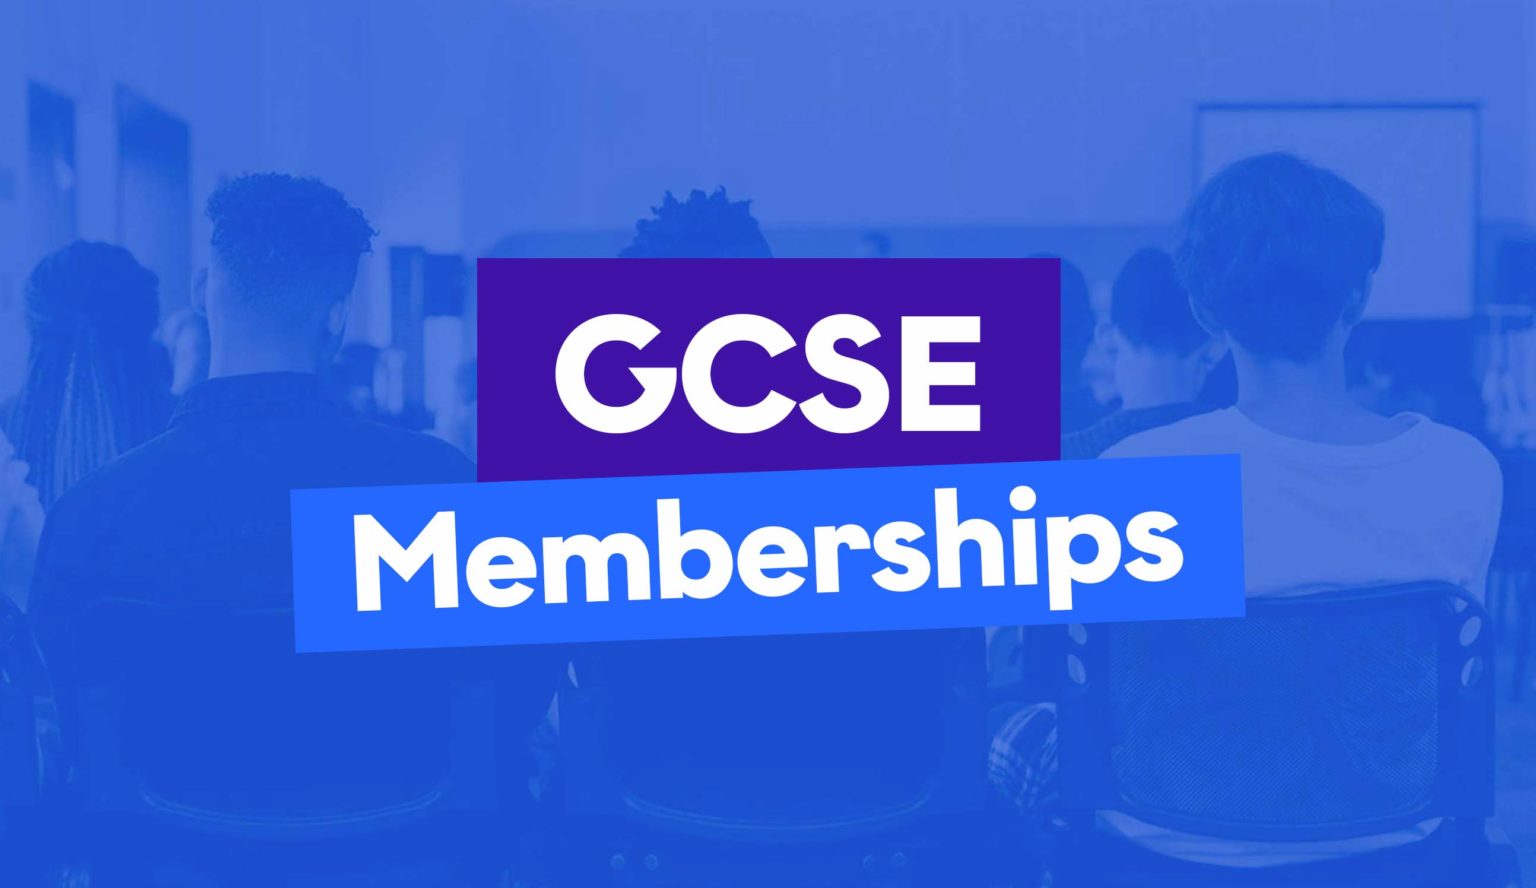 GSCE Memberships